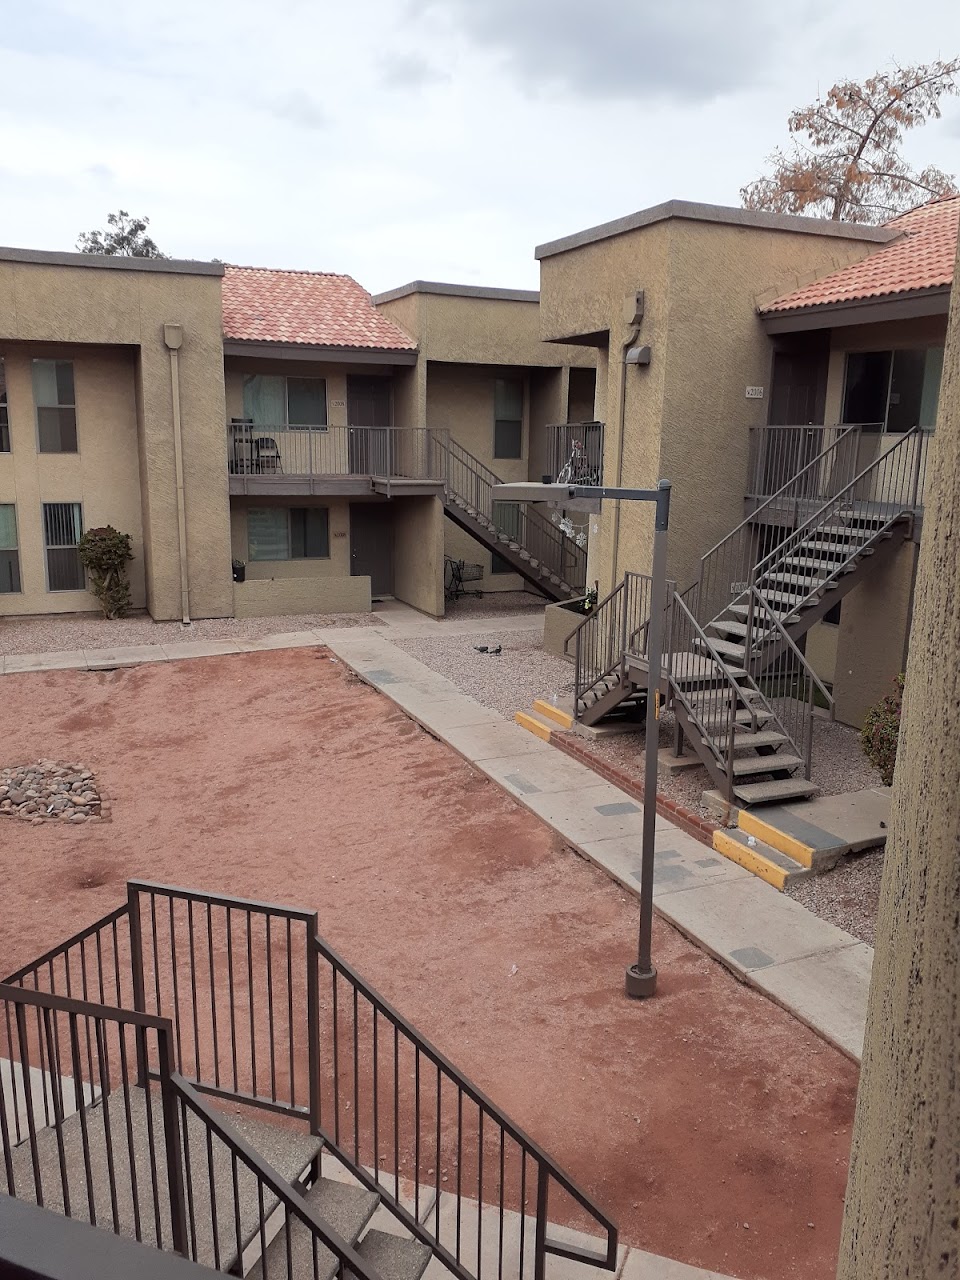 Photo of PINECREST APTS (PHOENIX). Affordable housing located at 2601 W CLAREMONT ST PHOENIX, AZ 85017